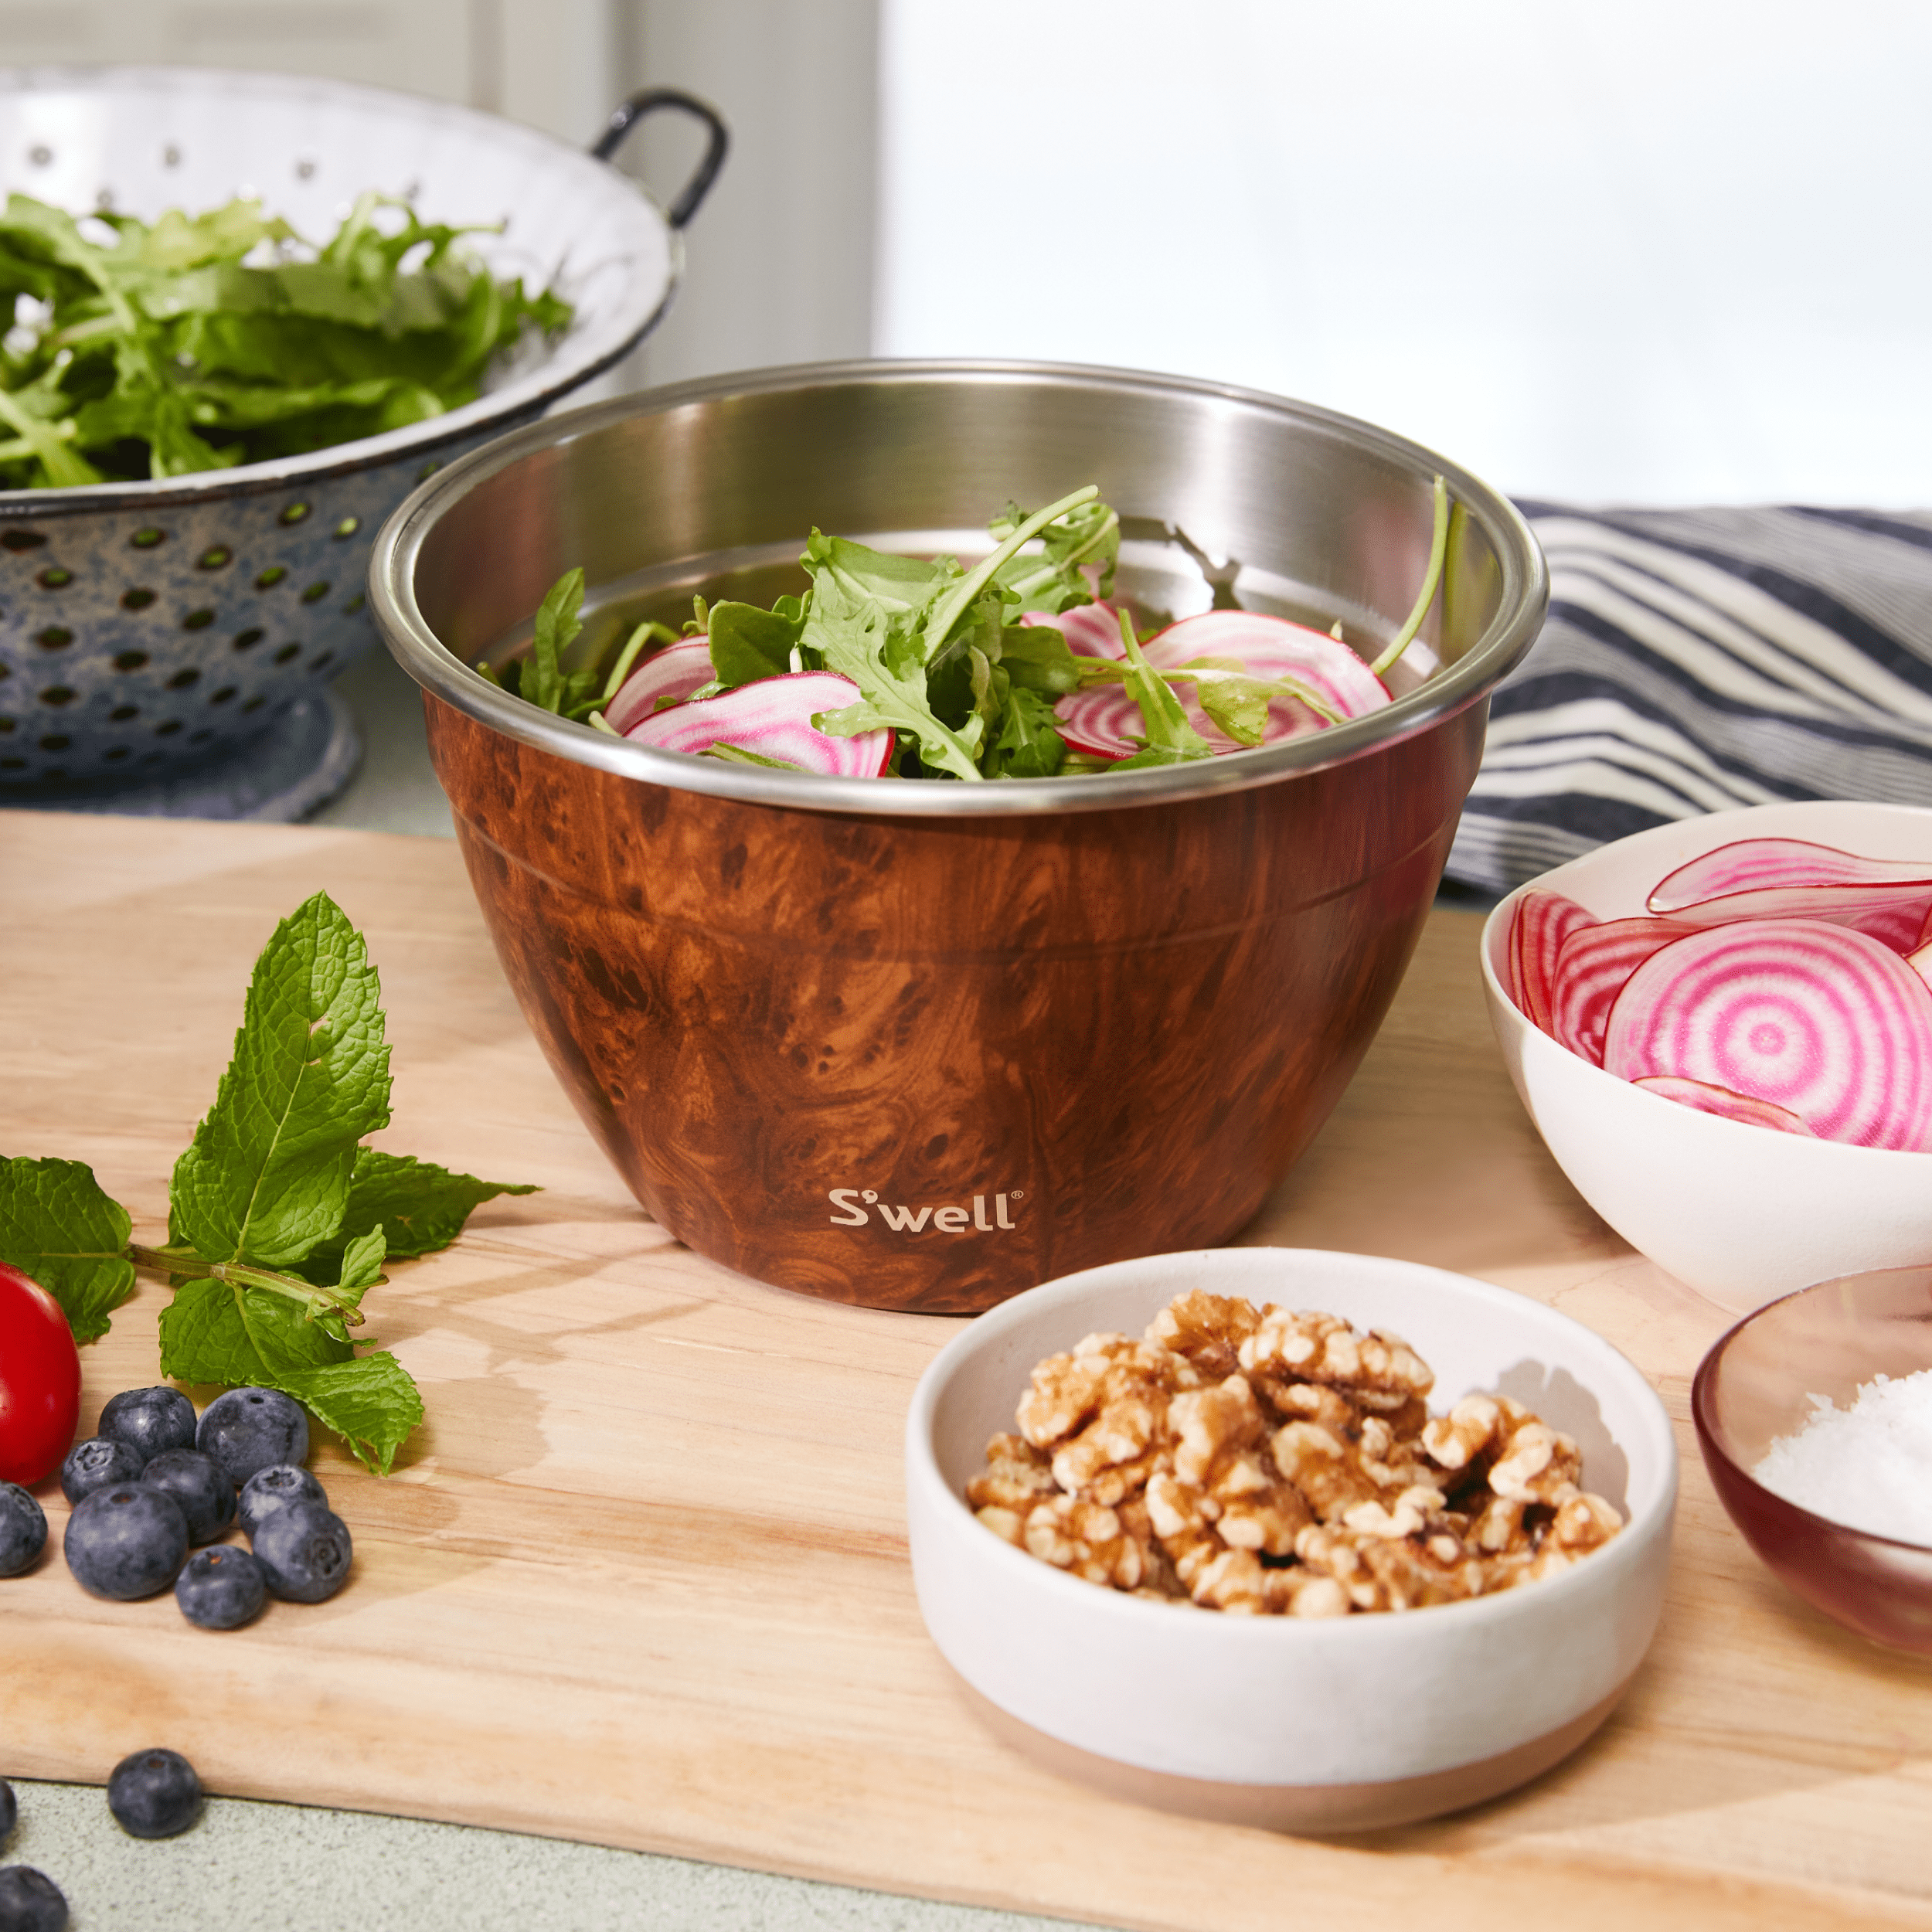 Swell: RESTOCK ALERT: The Salad Bowl Kit Is Back!